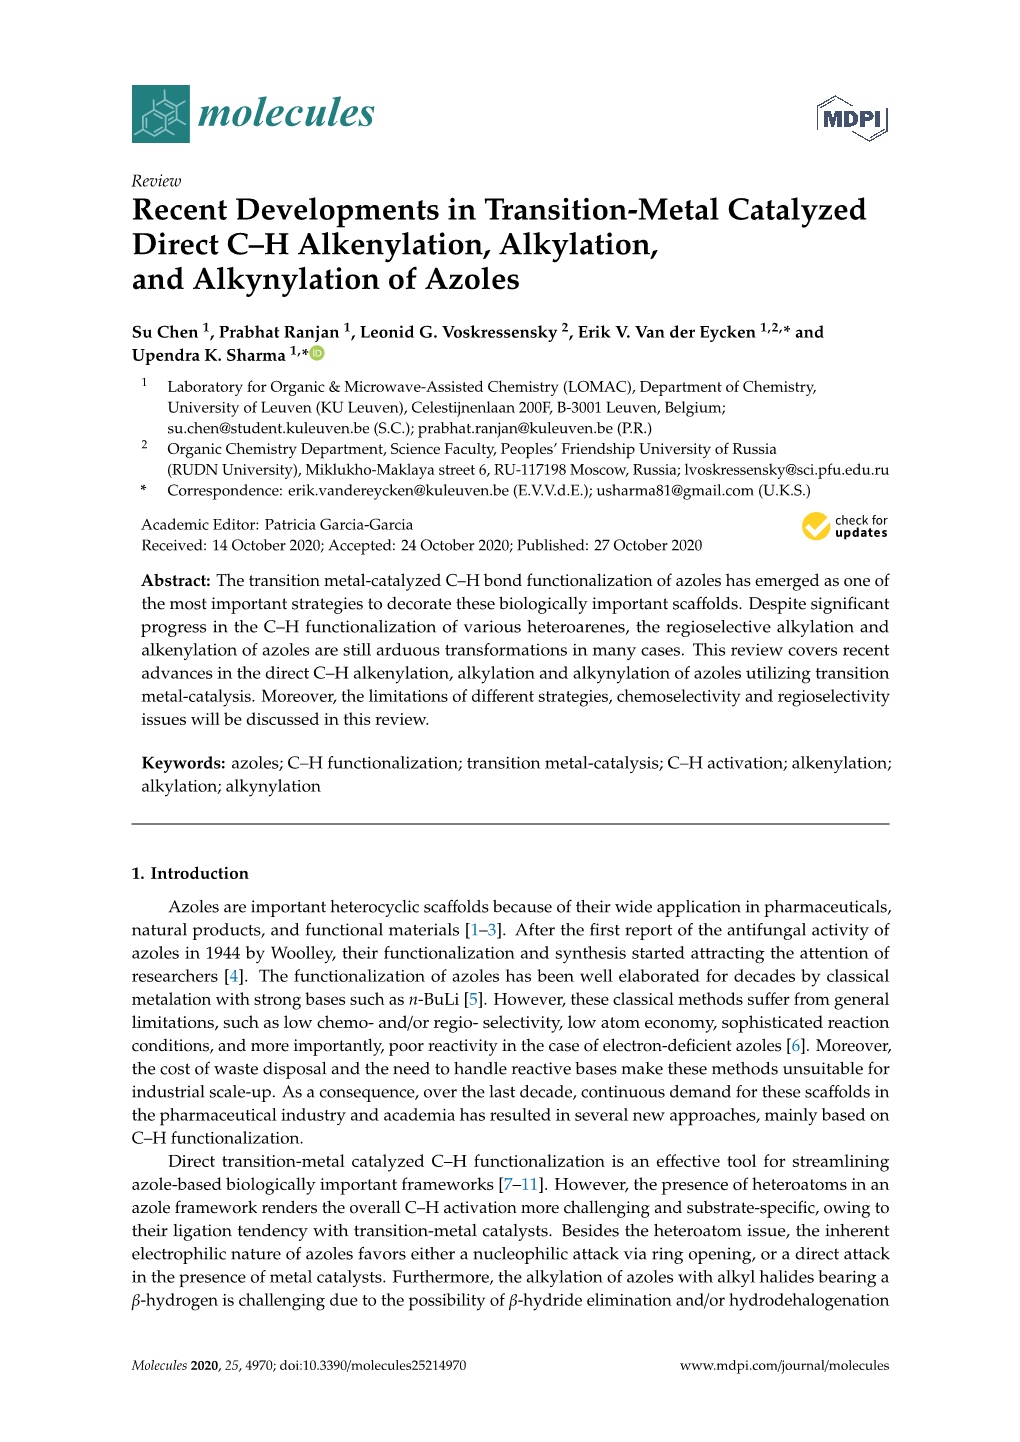 Recent Developments in Transition-Metal Catalyzed Direct C–H Alkenylation, Alkylation, and Alkynylation of Azoles